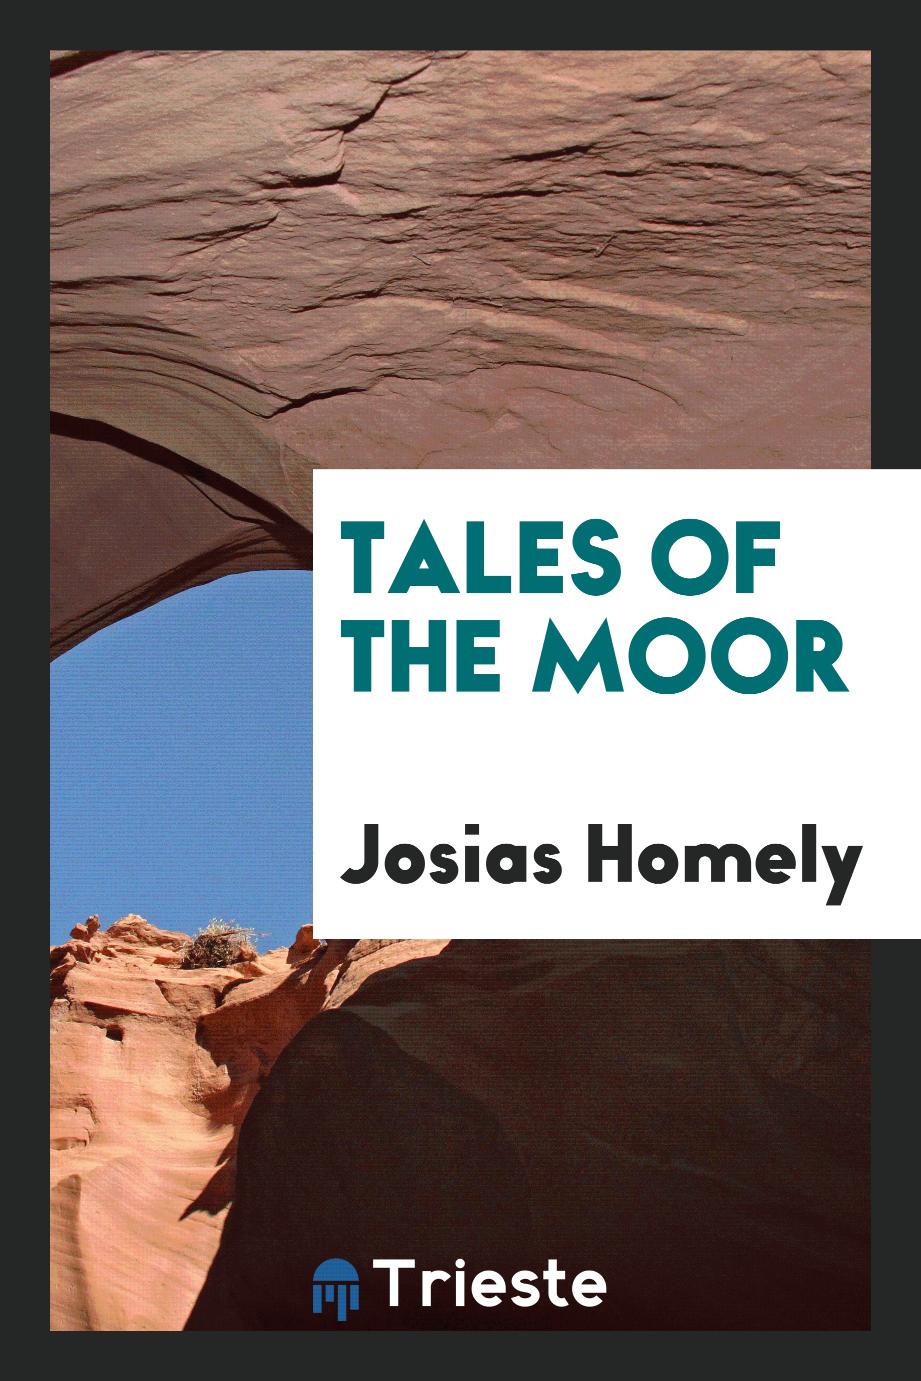 Tales of the moor